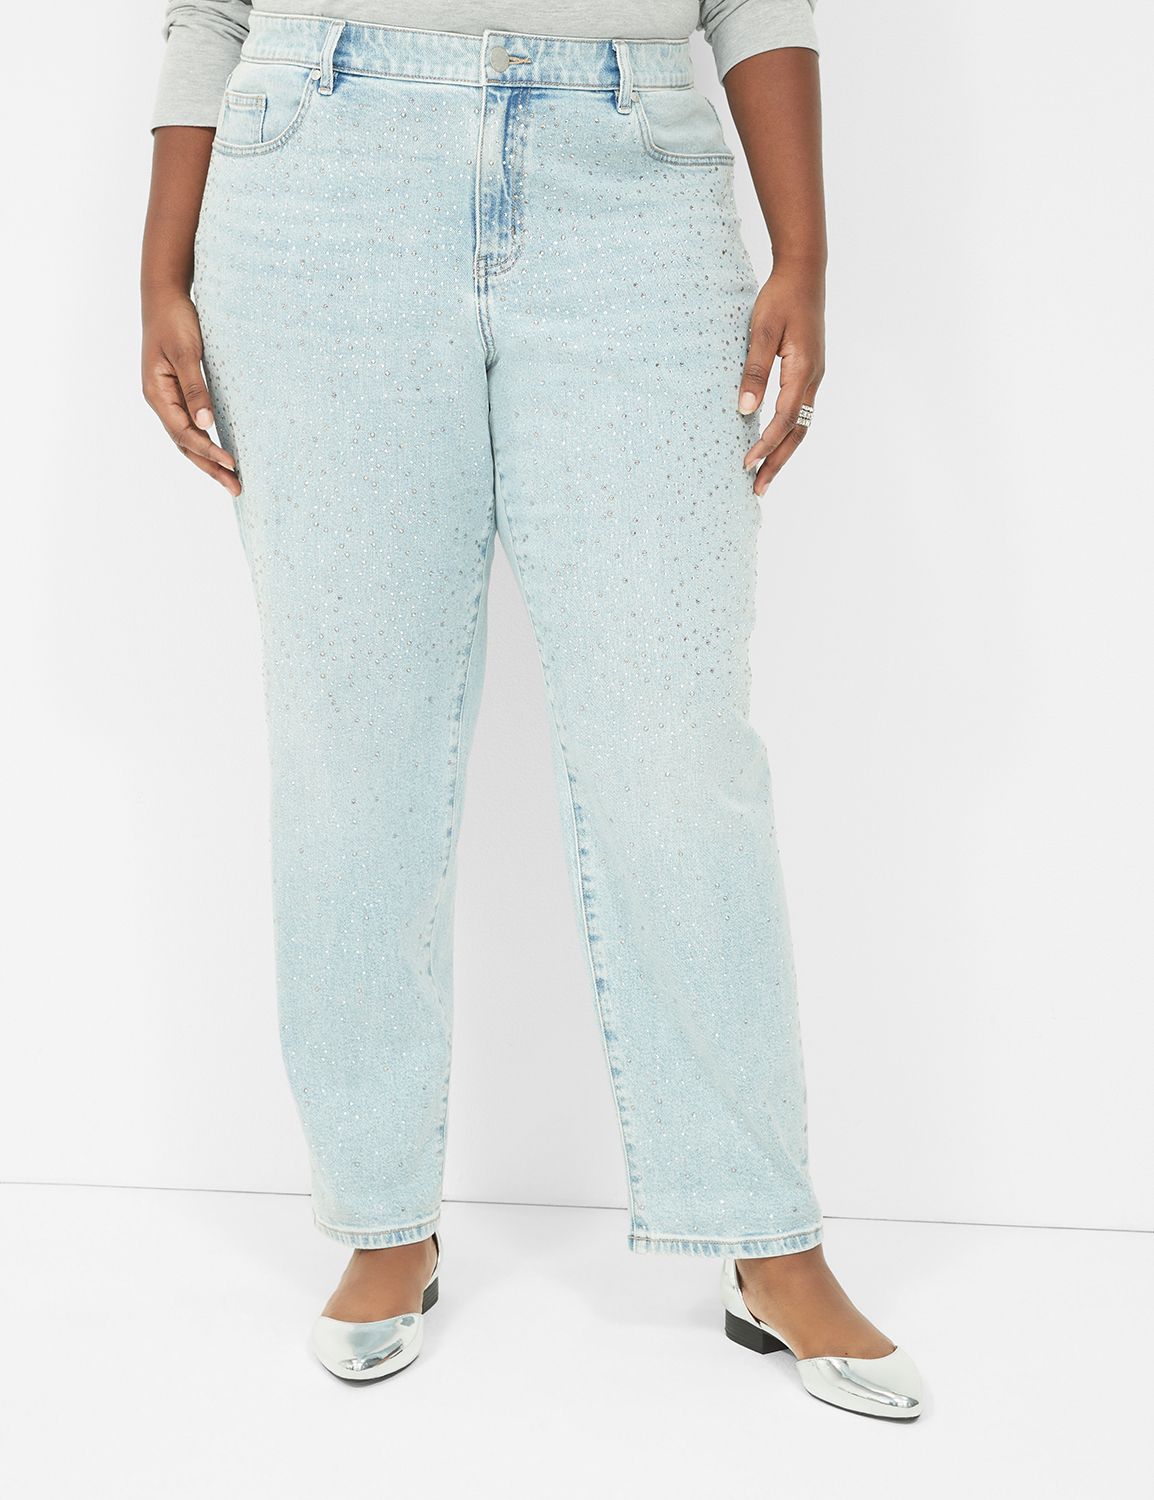 Plus Size 4xl Jean For Women Rhinestone High Waist Stretchy Denim